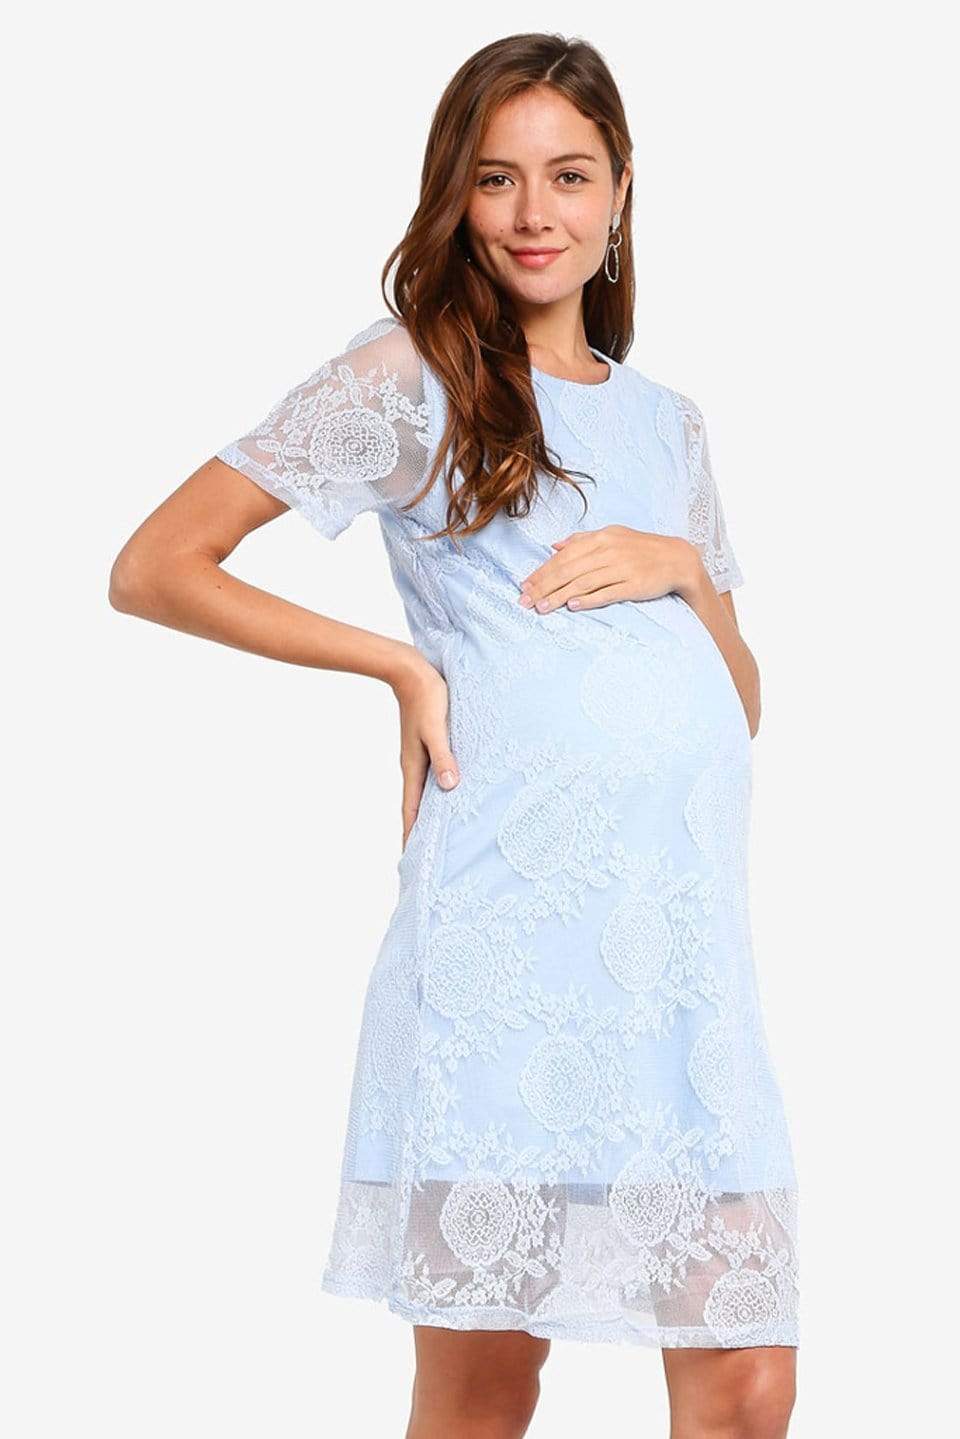 Spring Maternity's Catriona Full Lace Short Sleeve Nursing Dress Periwinkle Dresses